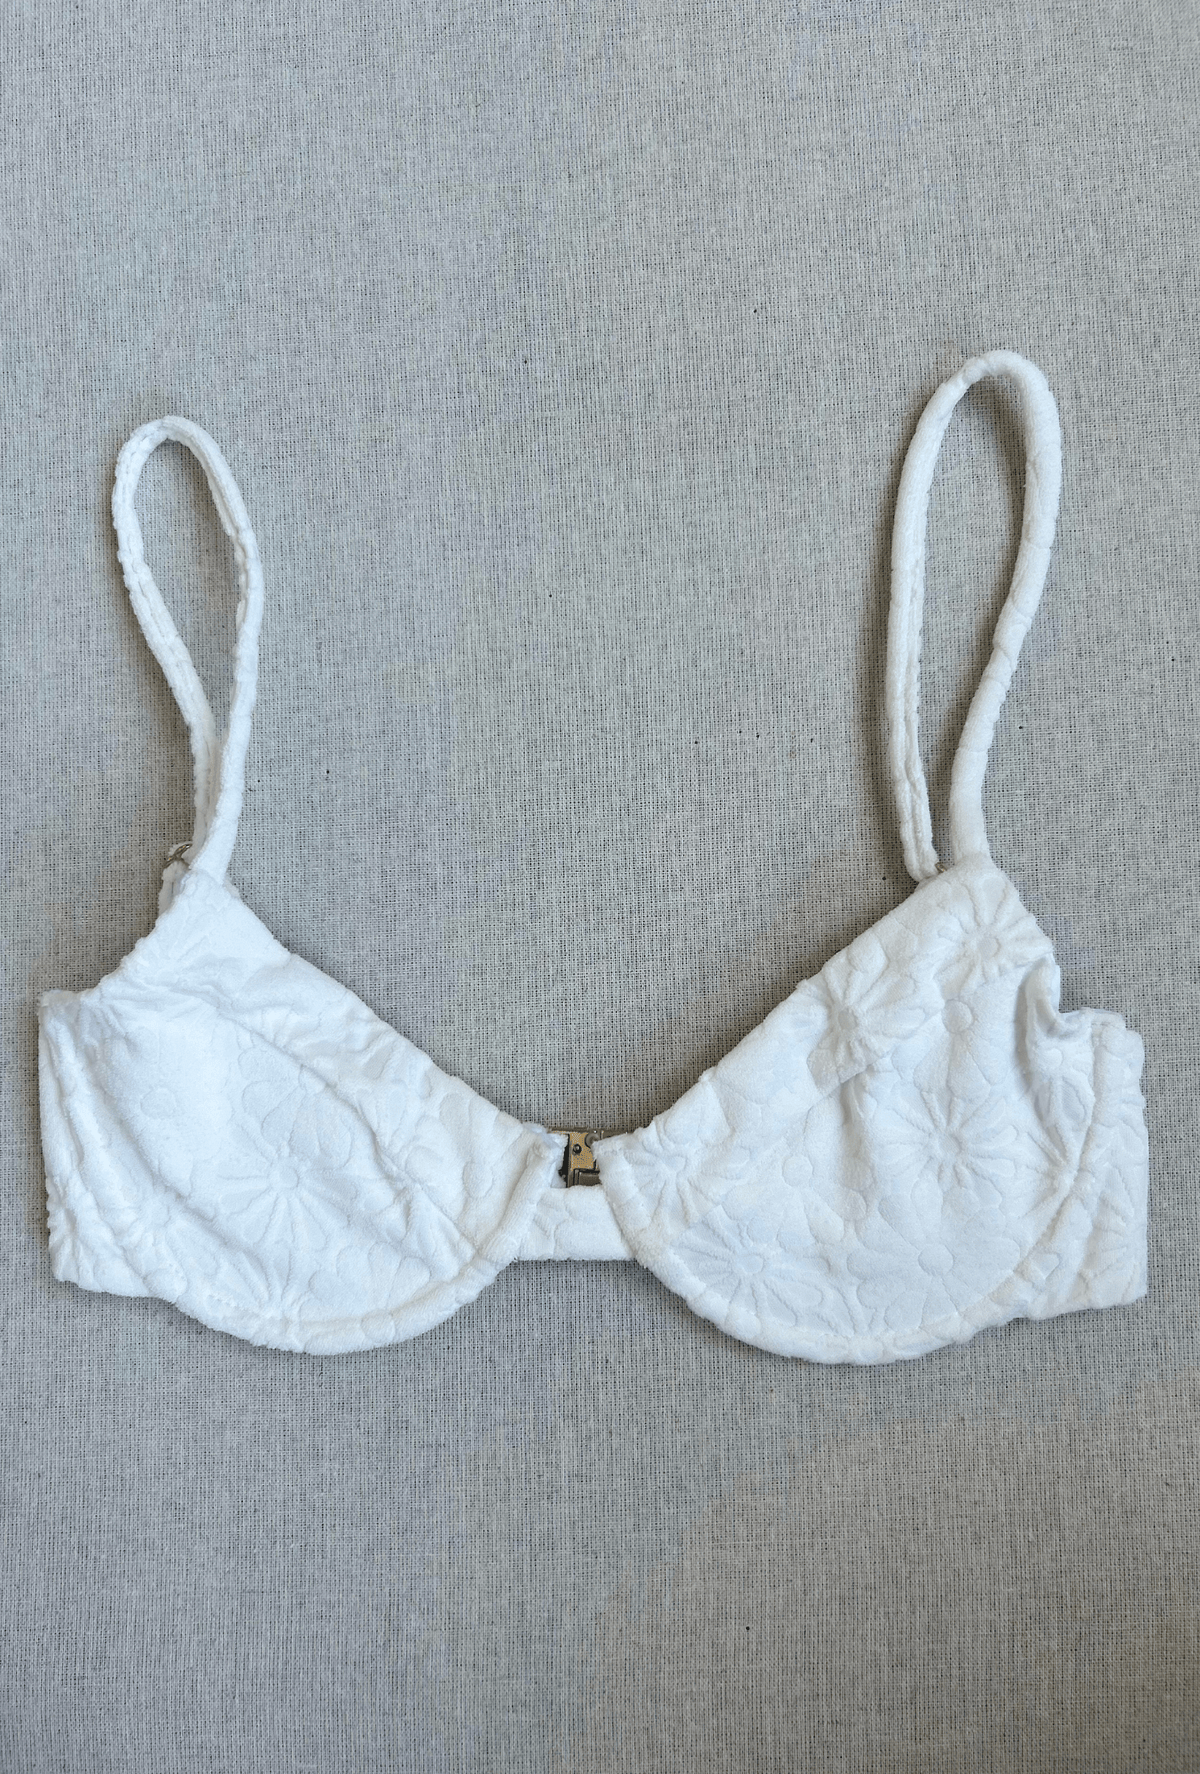 lulu top in white daisy - size xs